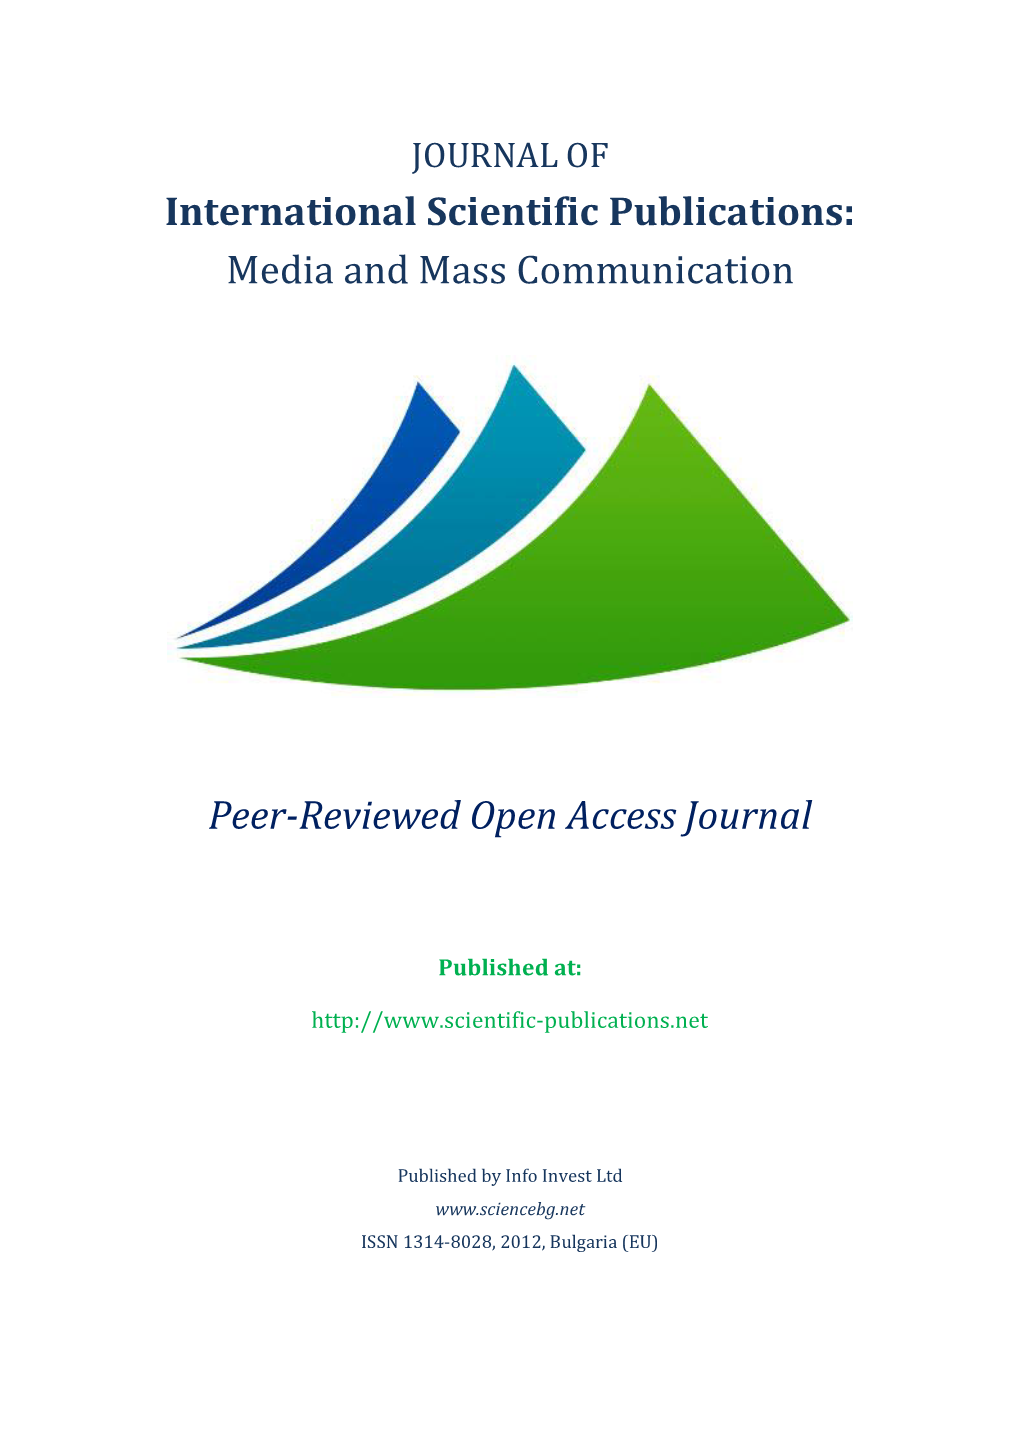 Media and Mass Communication, Volume 1